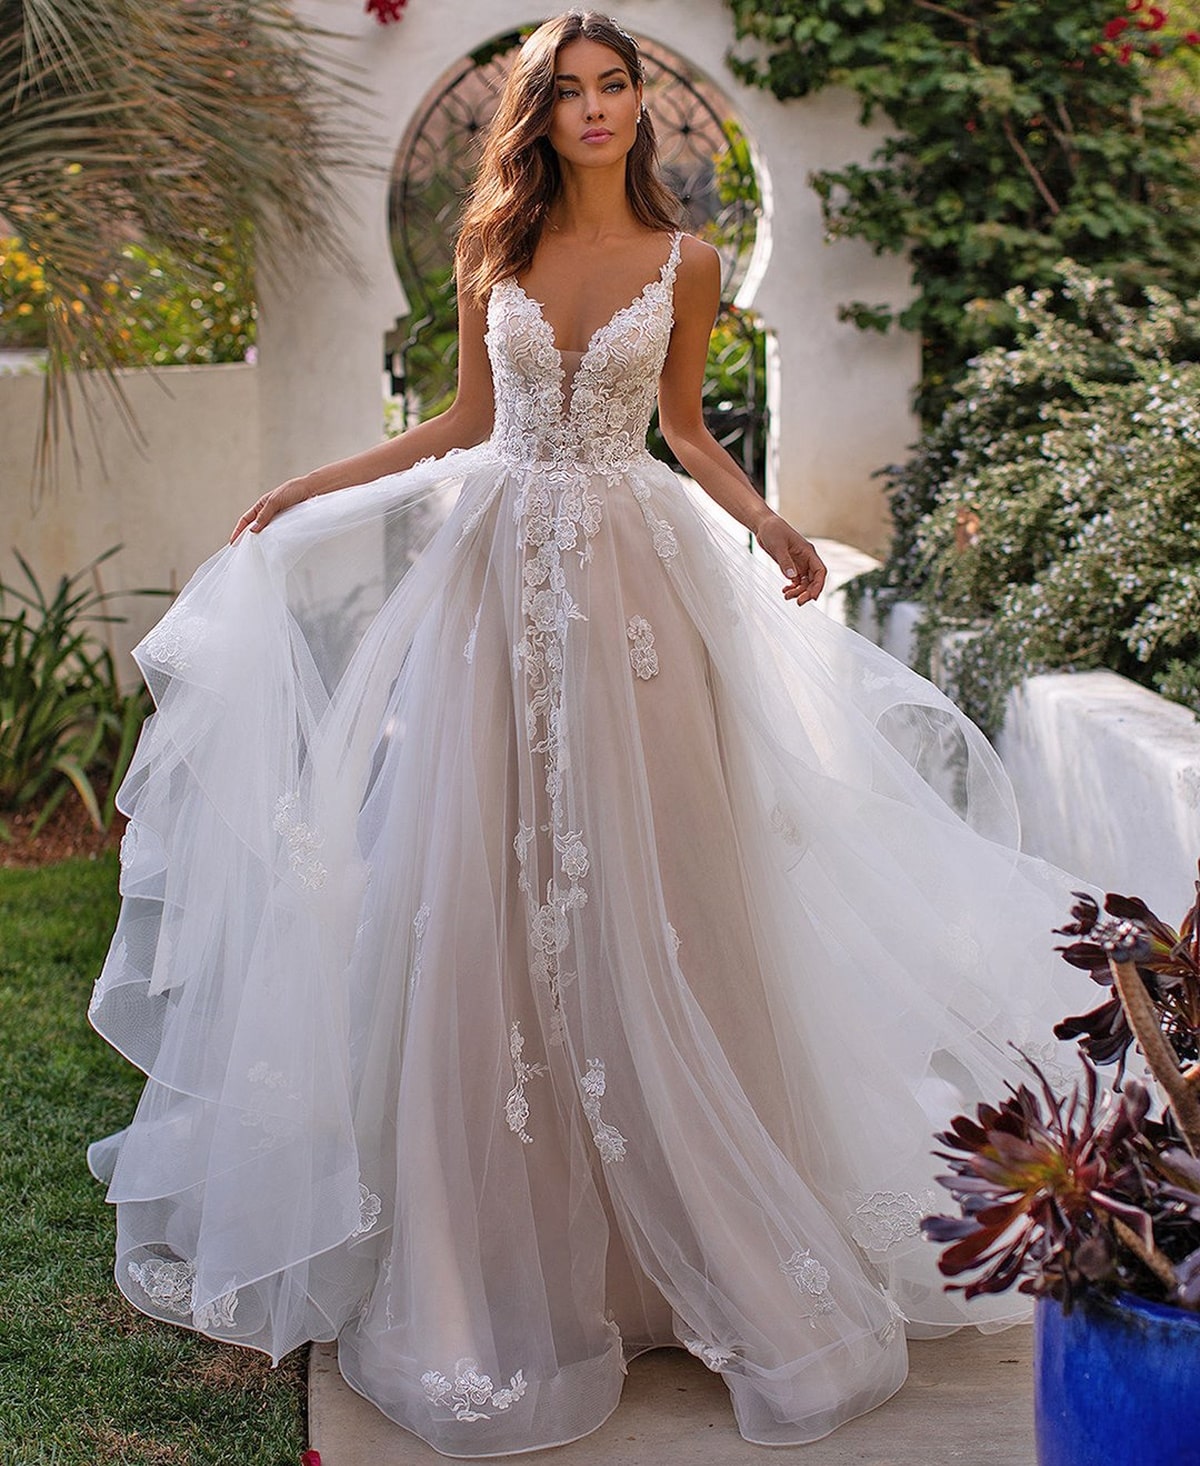 a bride wearing an a-line wedding gown